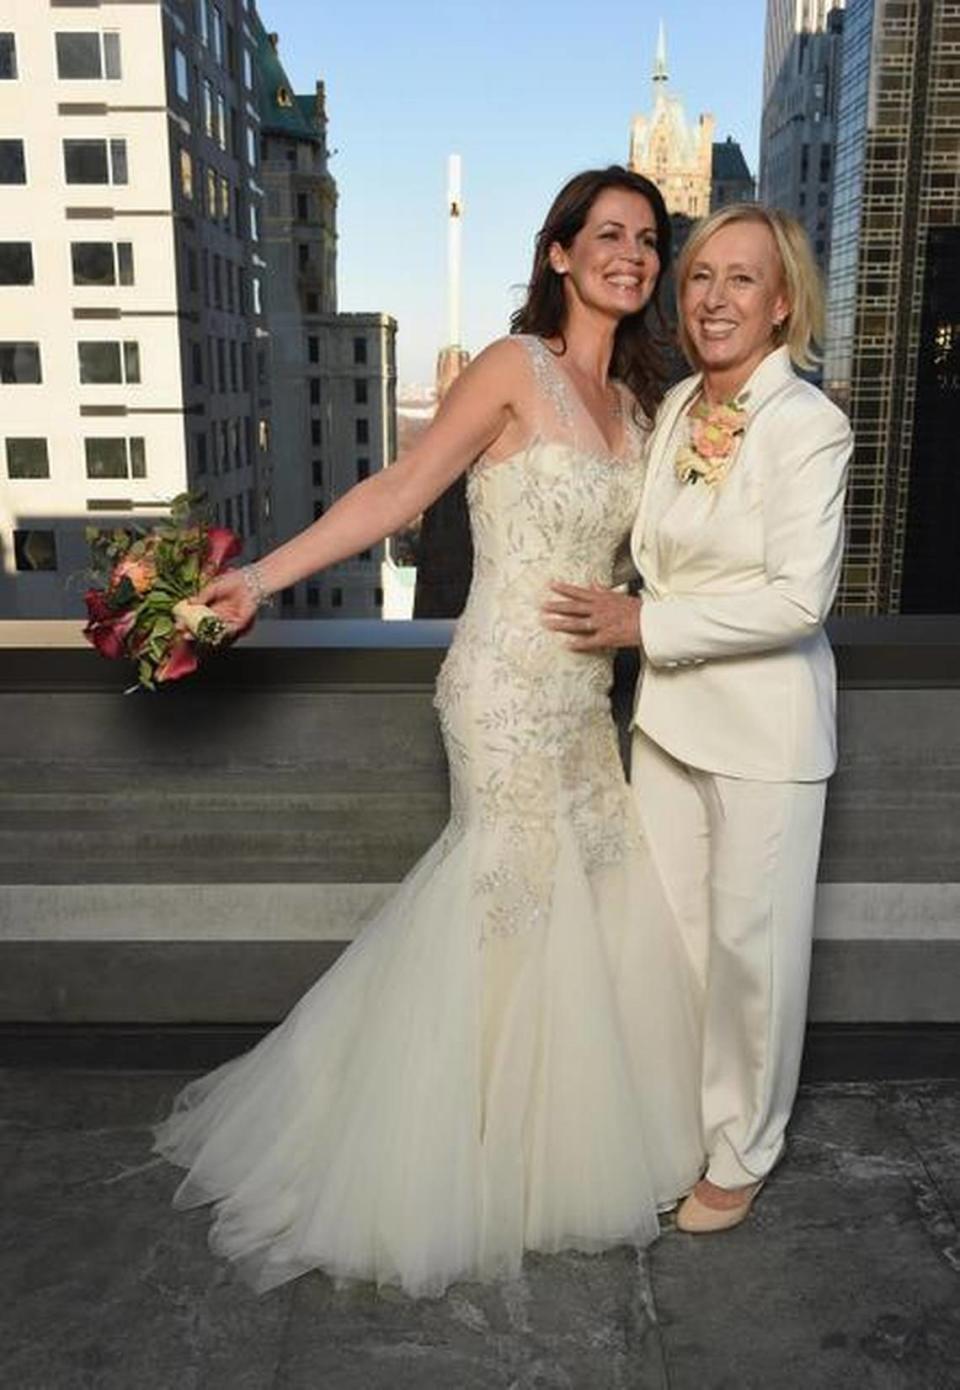 
Julia Lemigova and Martina Navratilova attend their wedding at The Peninsula Hotel on Dec. 15, 2014 in New York City.
